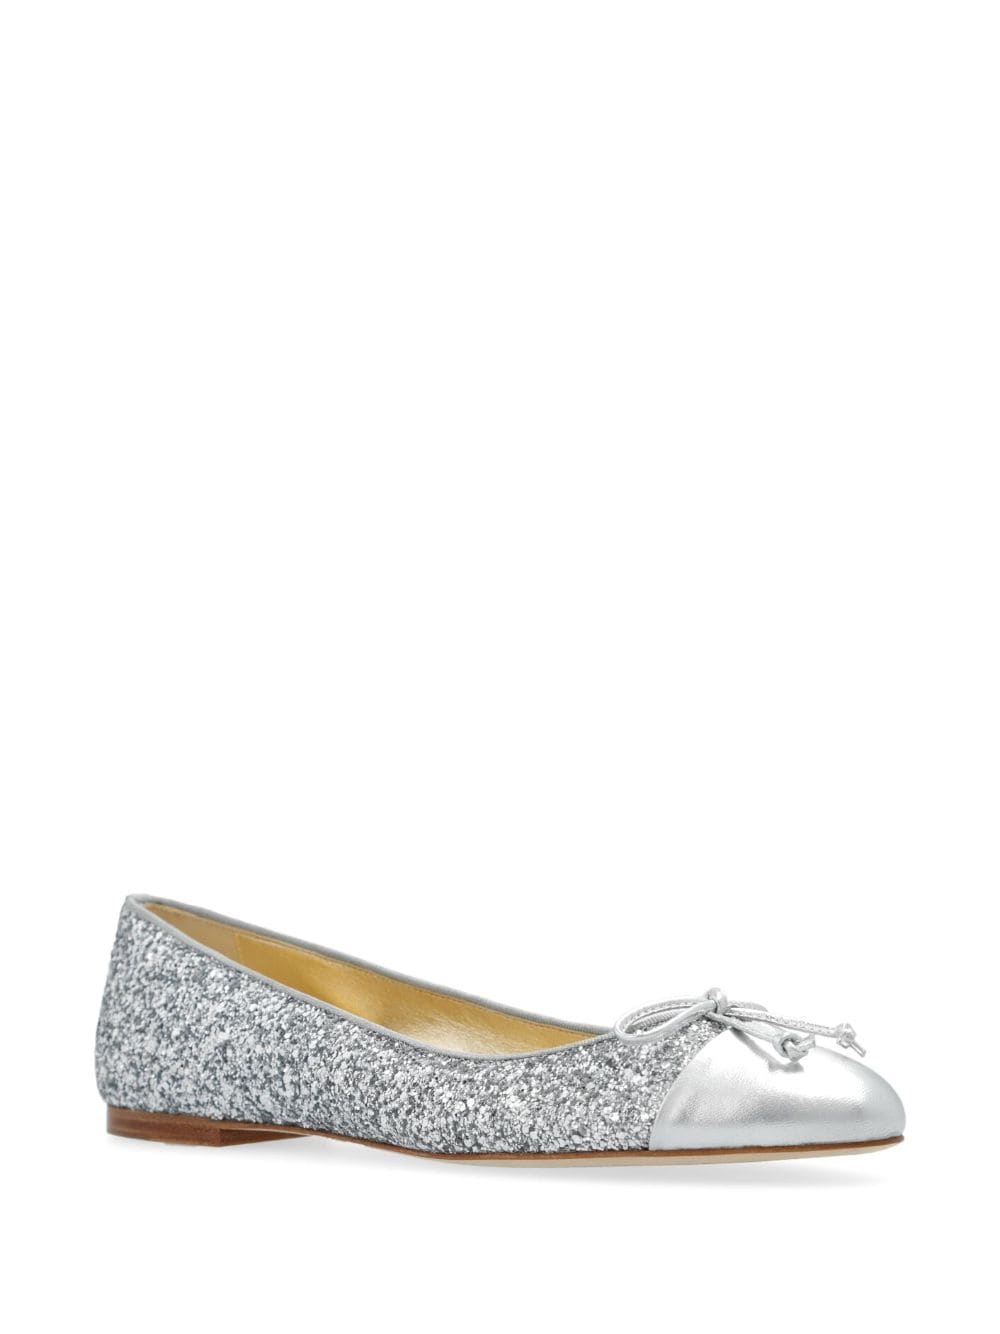 Sophia Webster Pirouette glittered ballerina shoes - Zilver